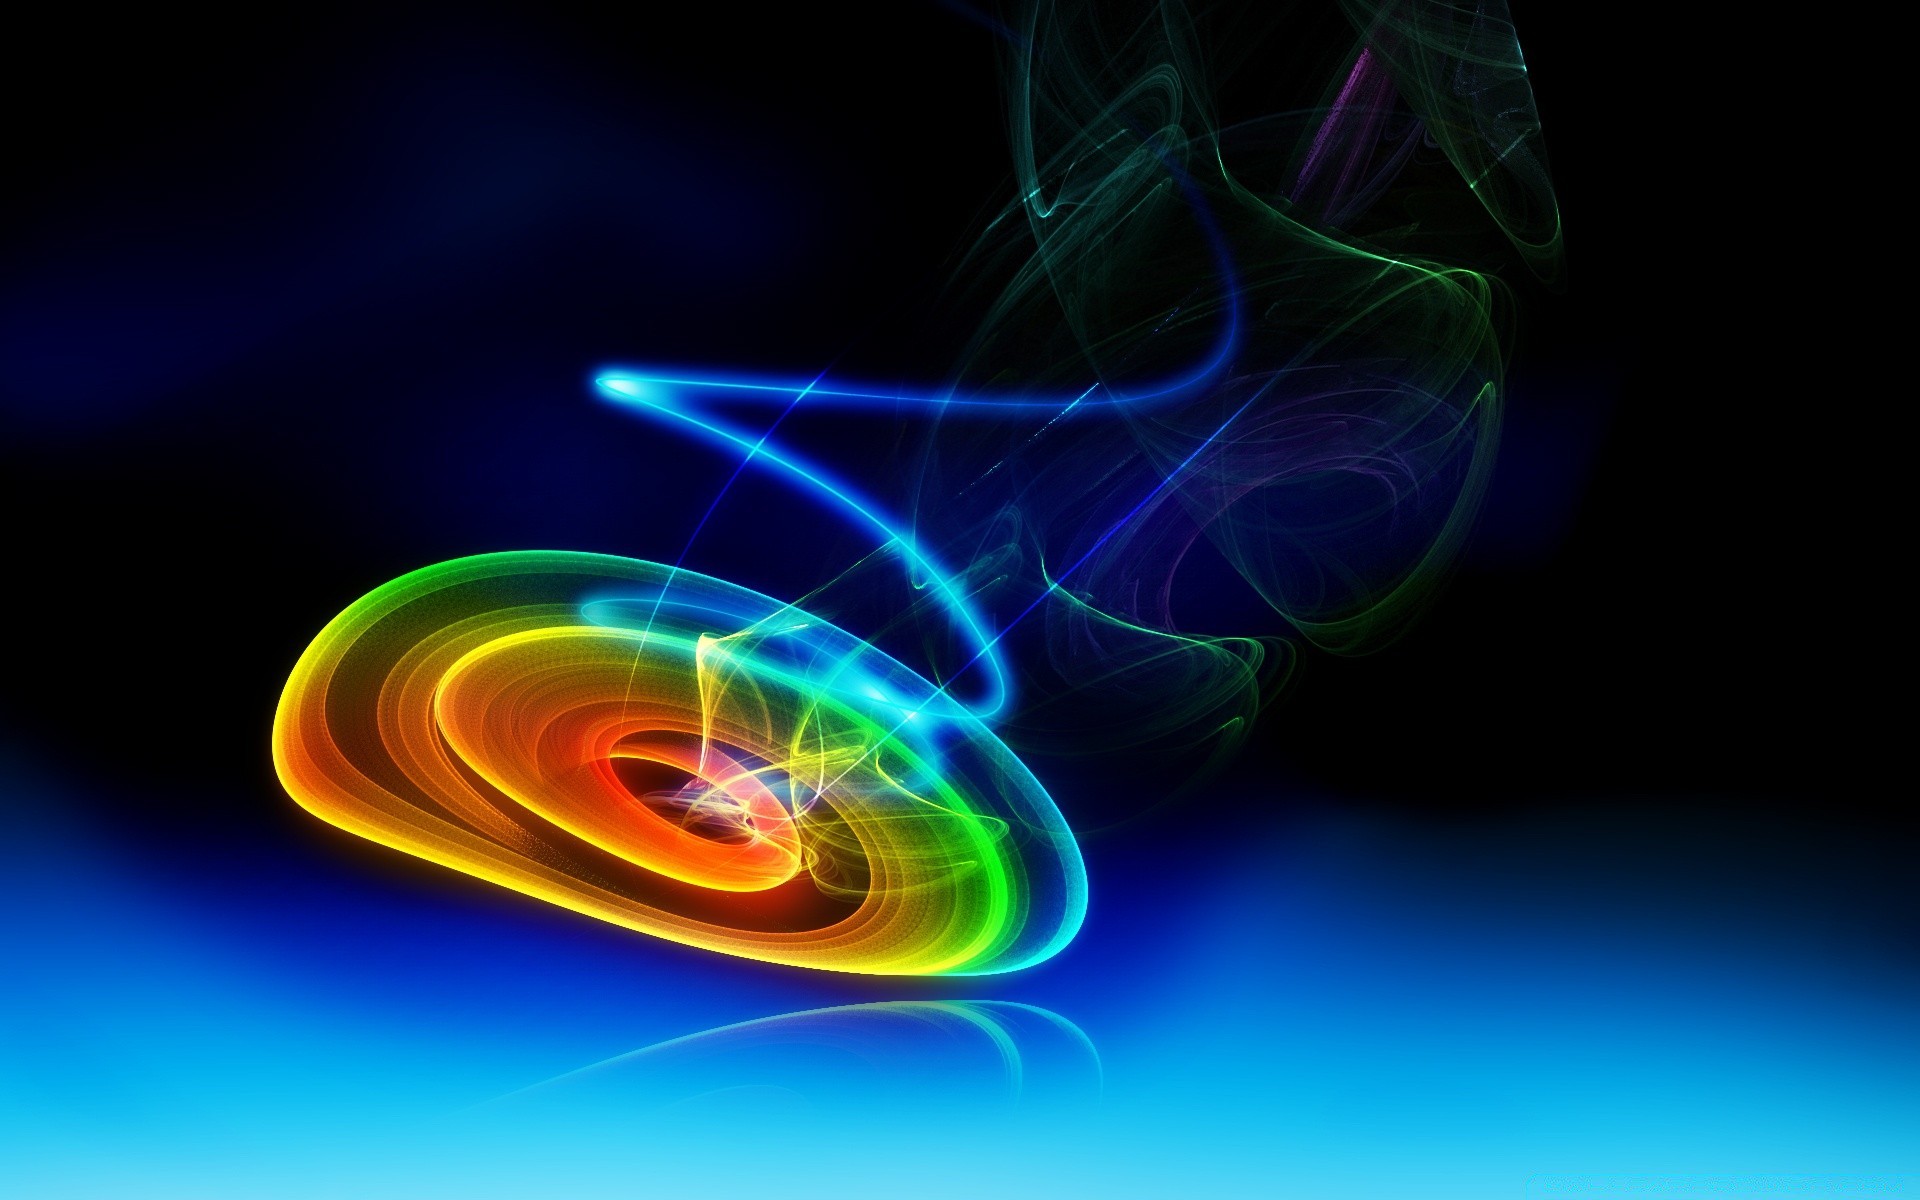 bright colors abstract energy design desktop illustration color motion light curve flame graphic blur fractal line bright art wave fantasy shape ring